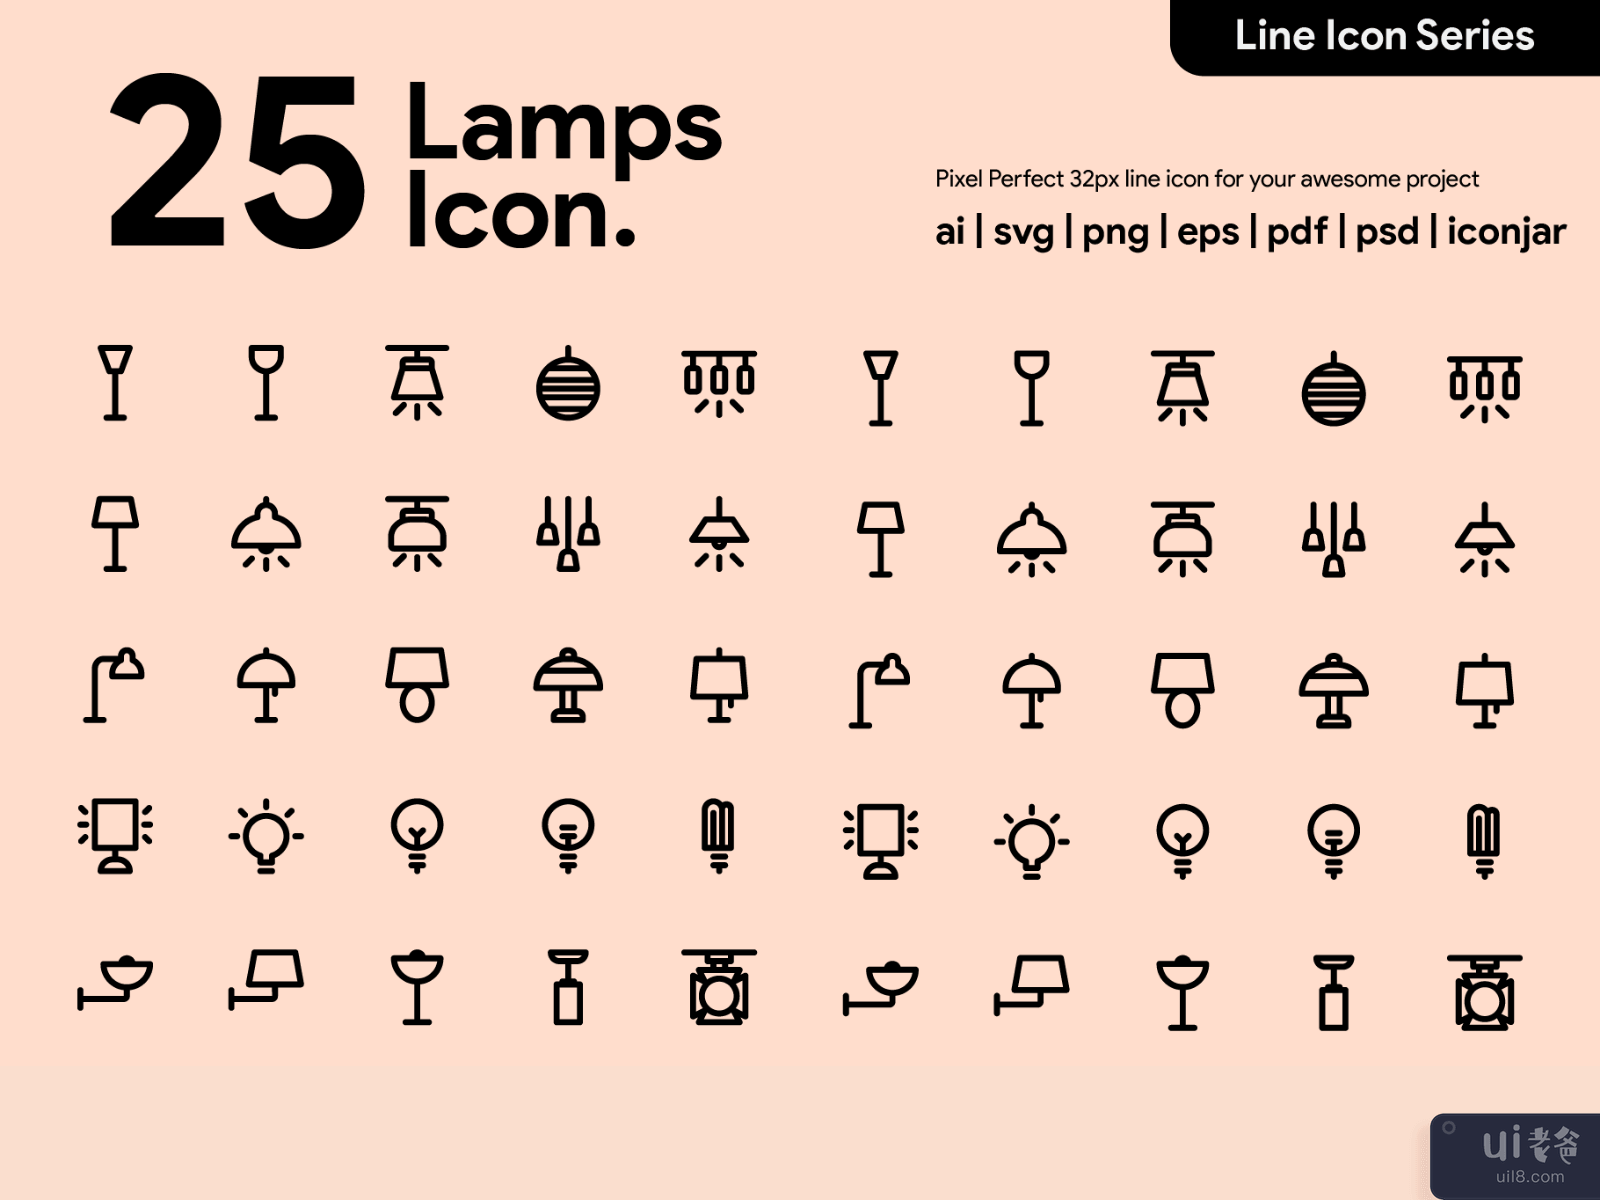 Kawaicon - 25 Lamps Line Icon